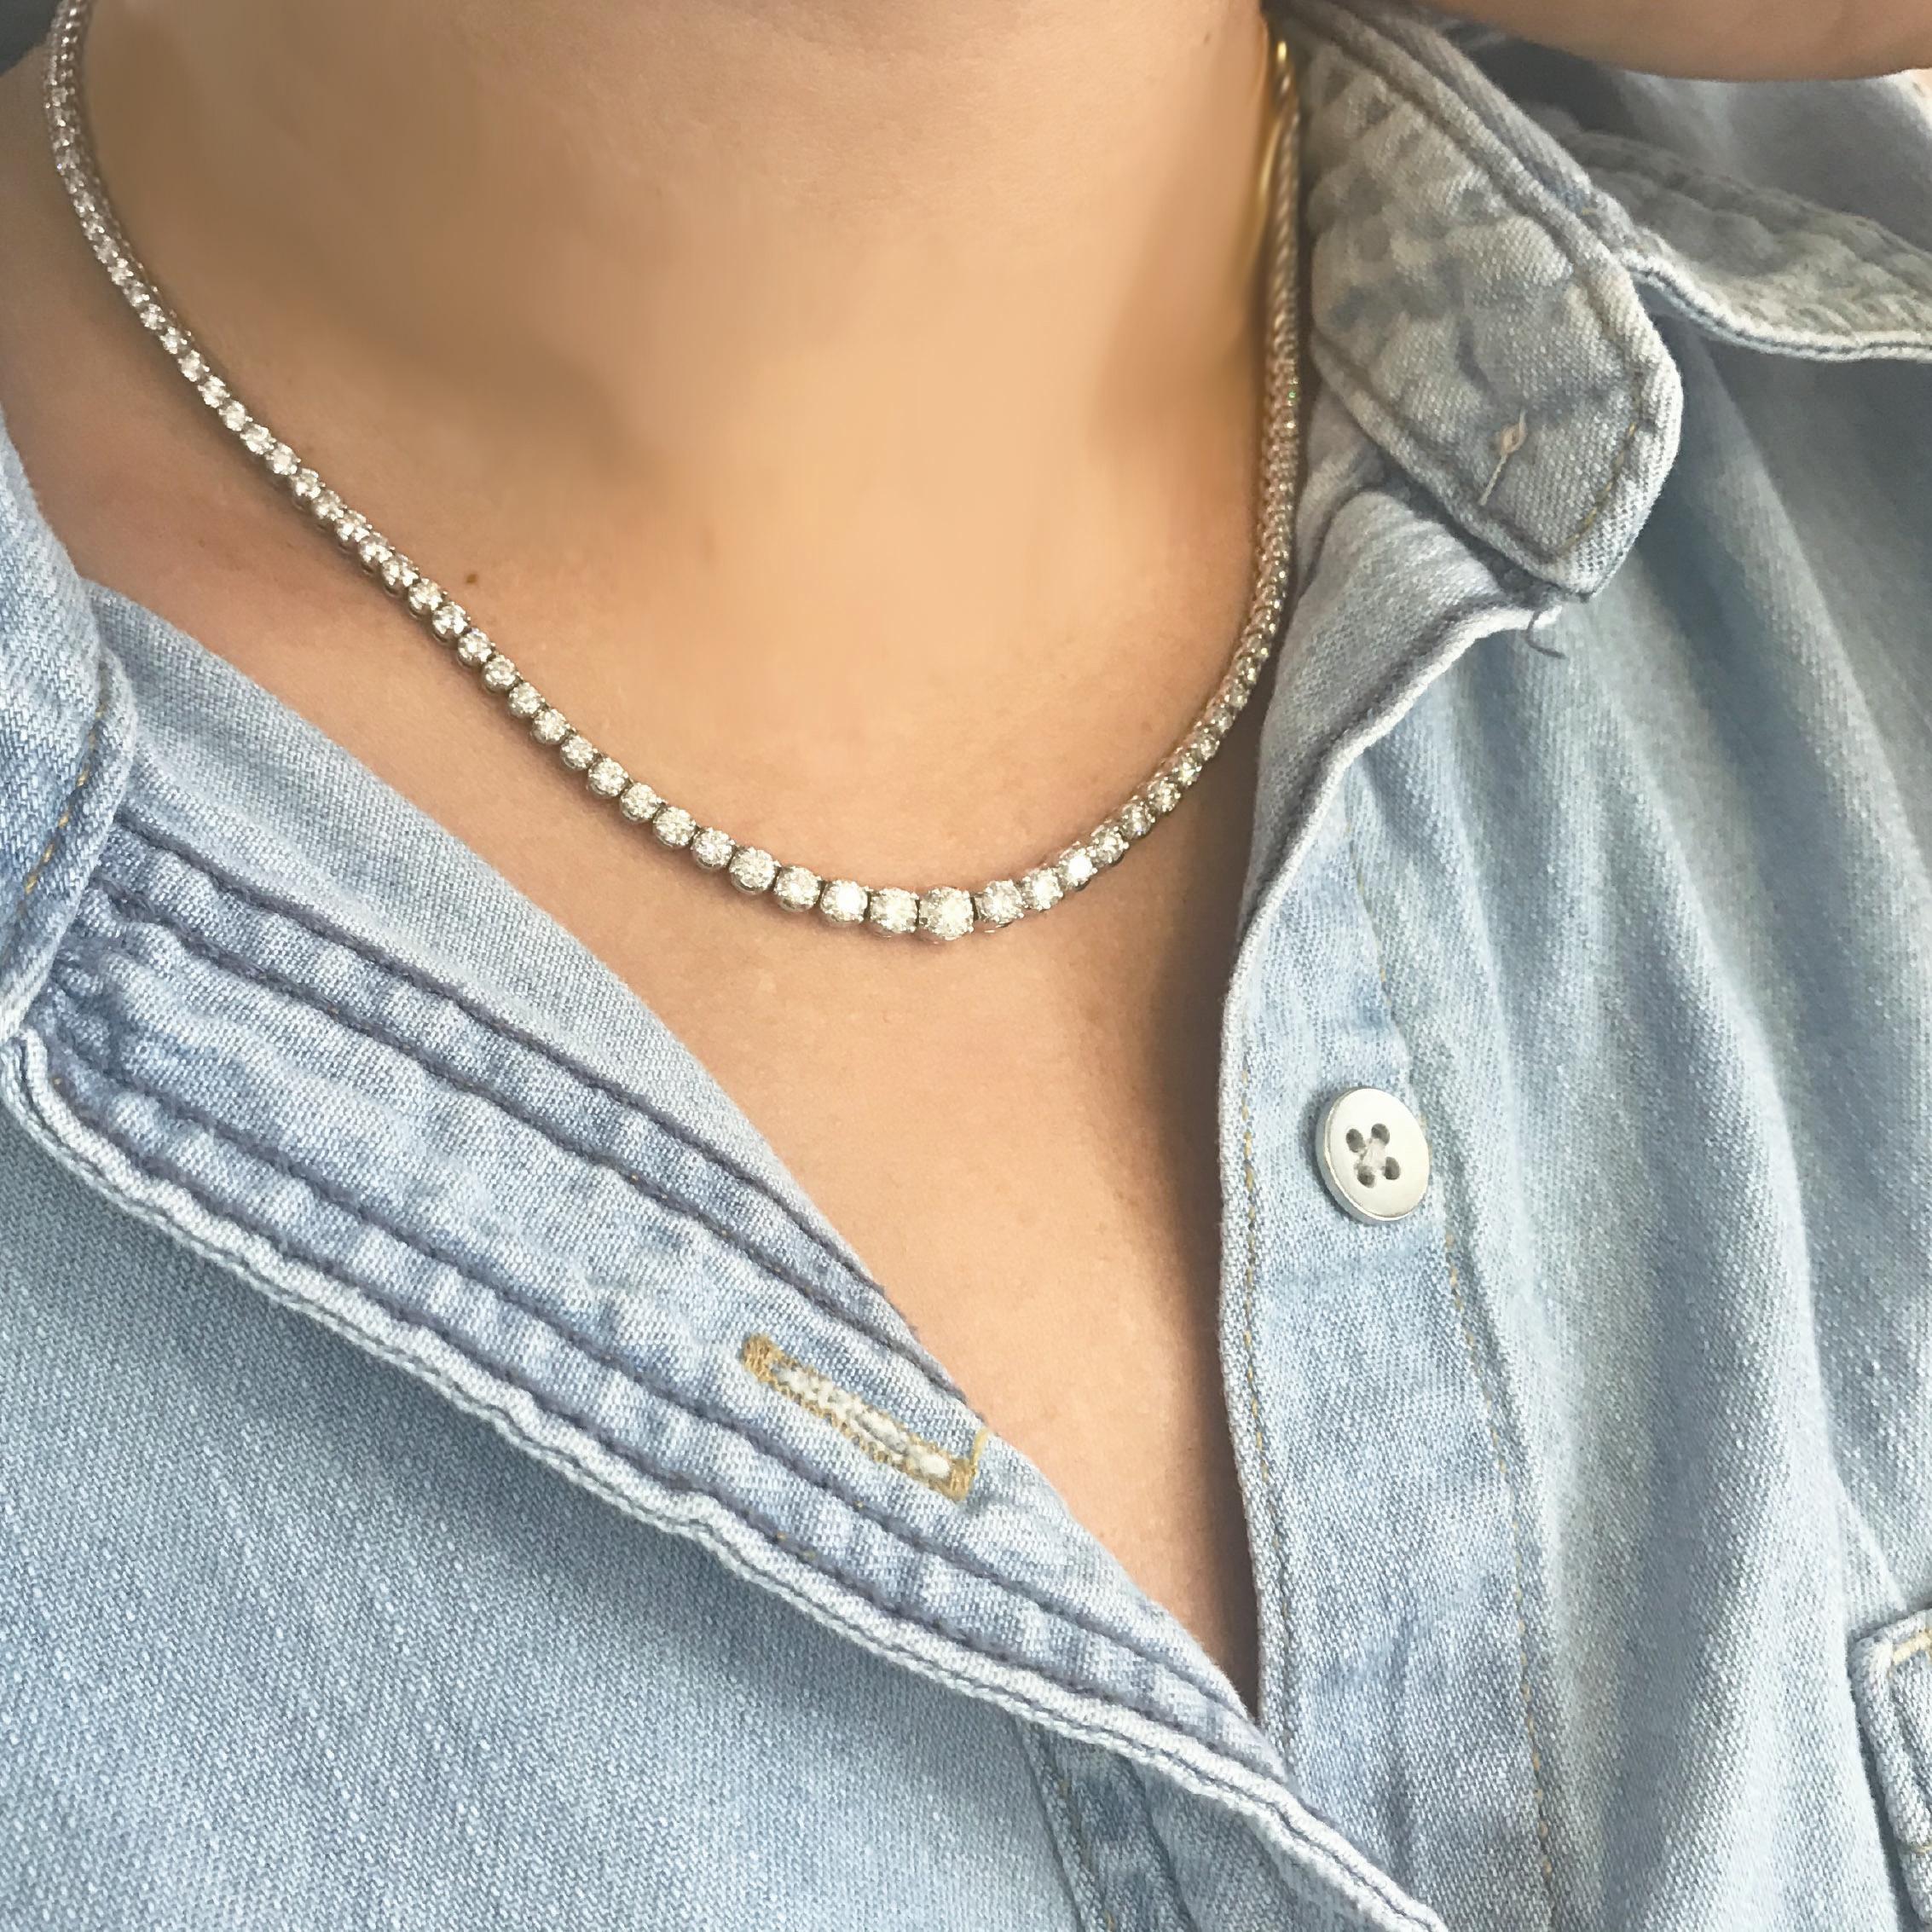 5 ct diamond necklace